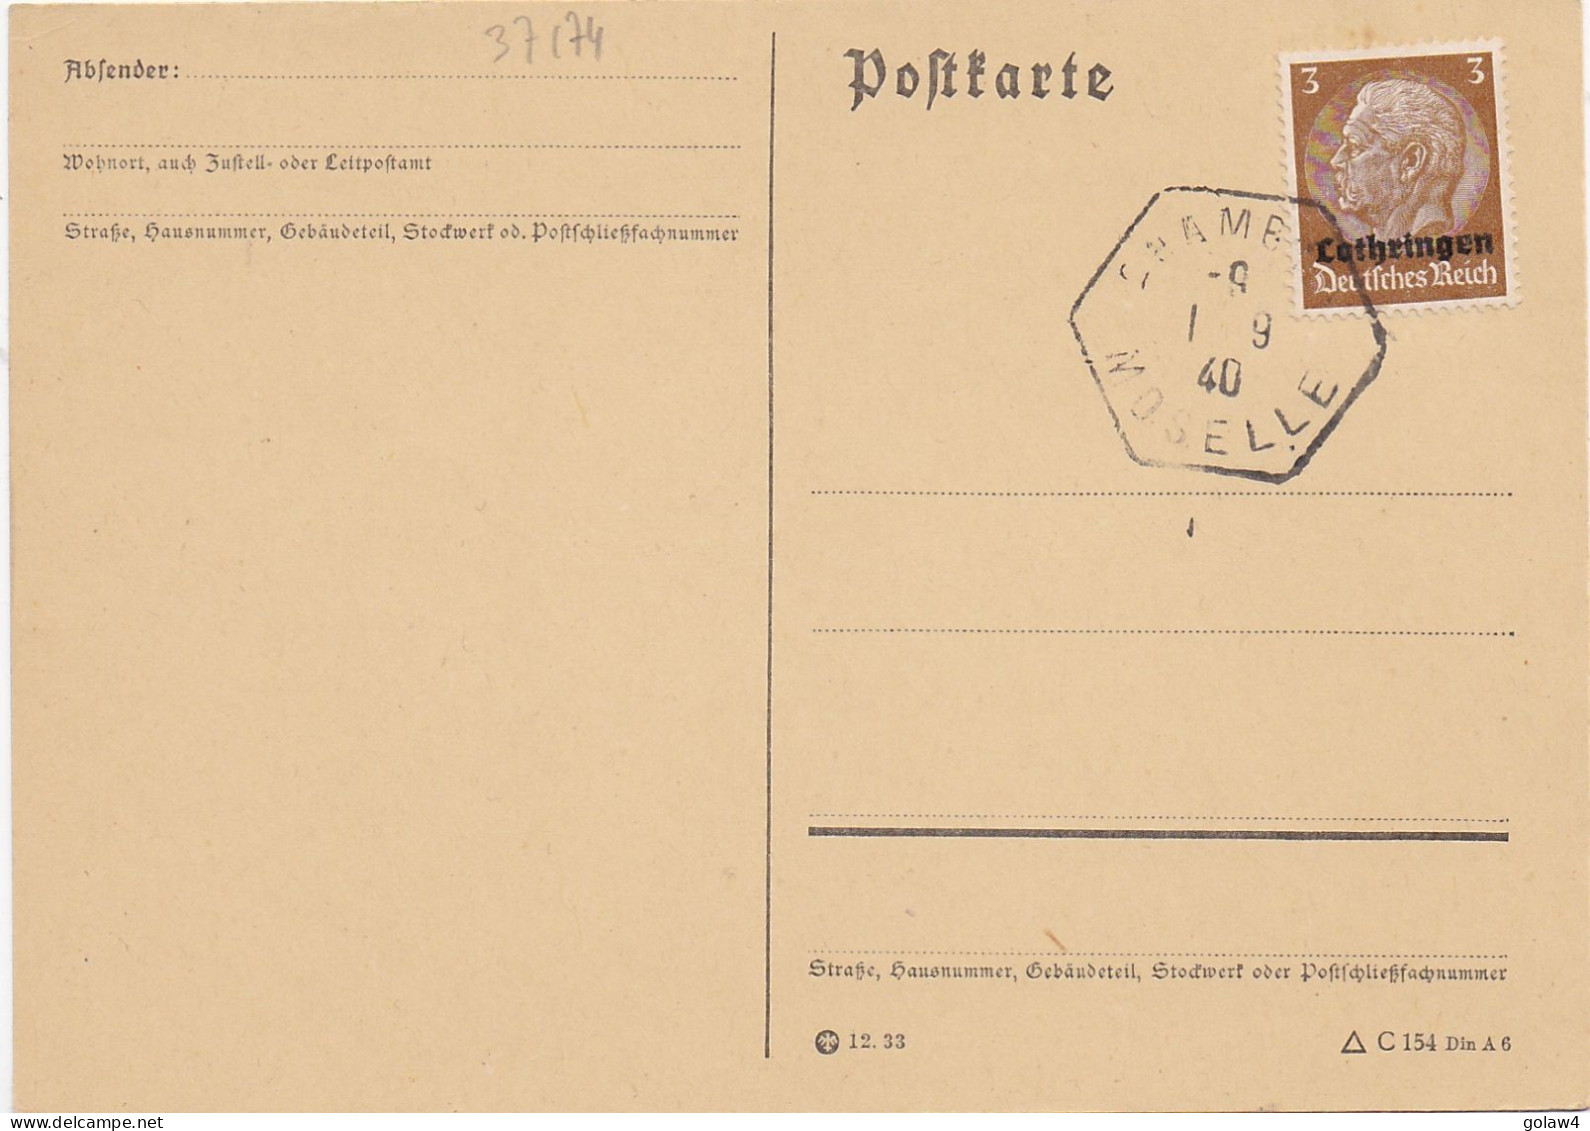 37174# HINDENBURG LOTHRINGEN CARTE POSTALE Obl CHAMBREY MOSELLE 1 Septembre 1940 - Storia Postale